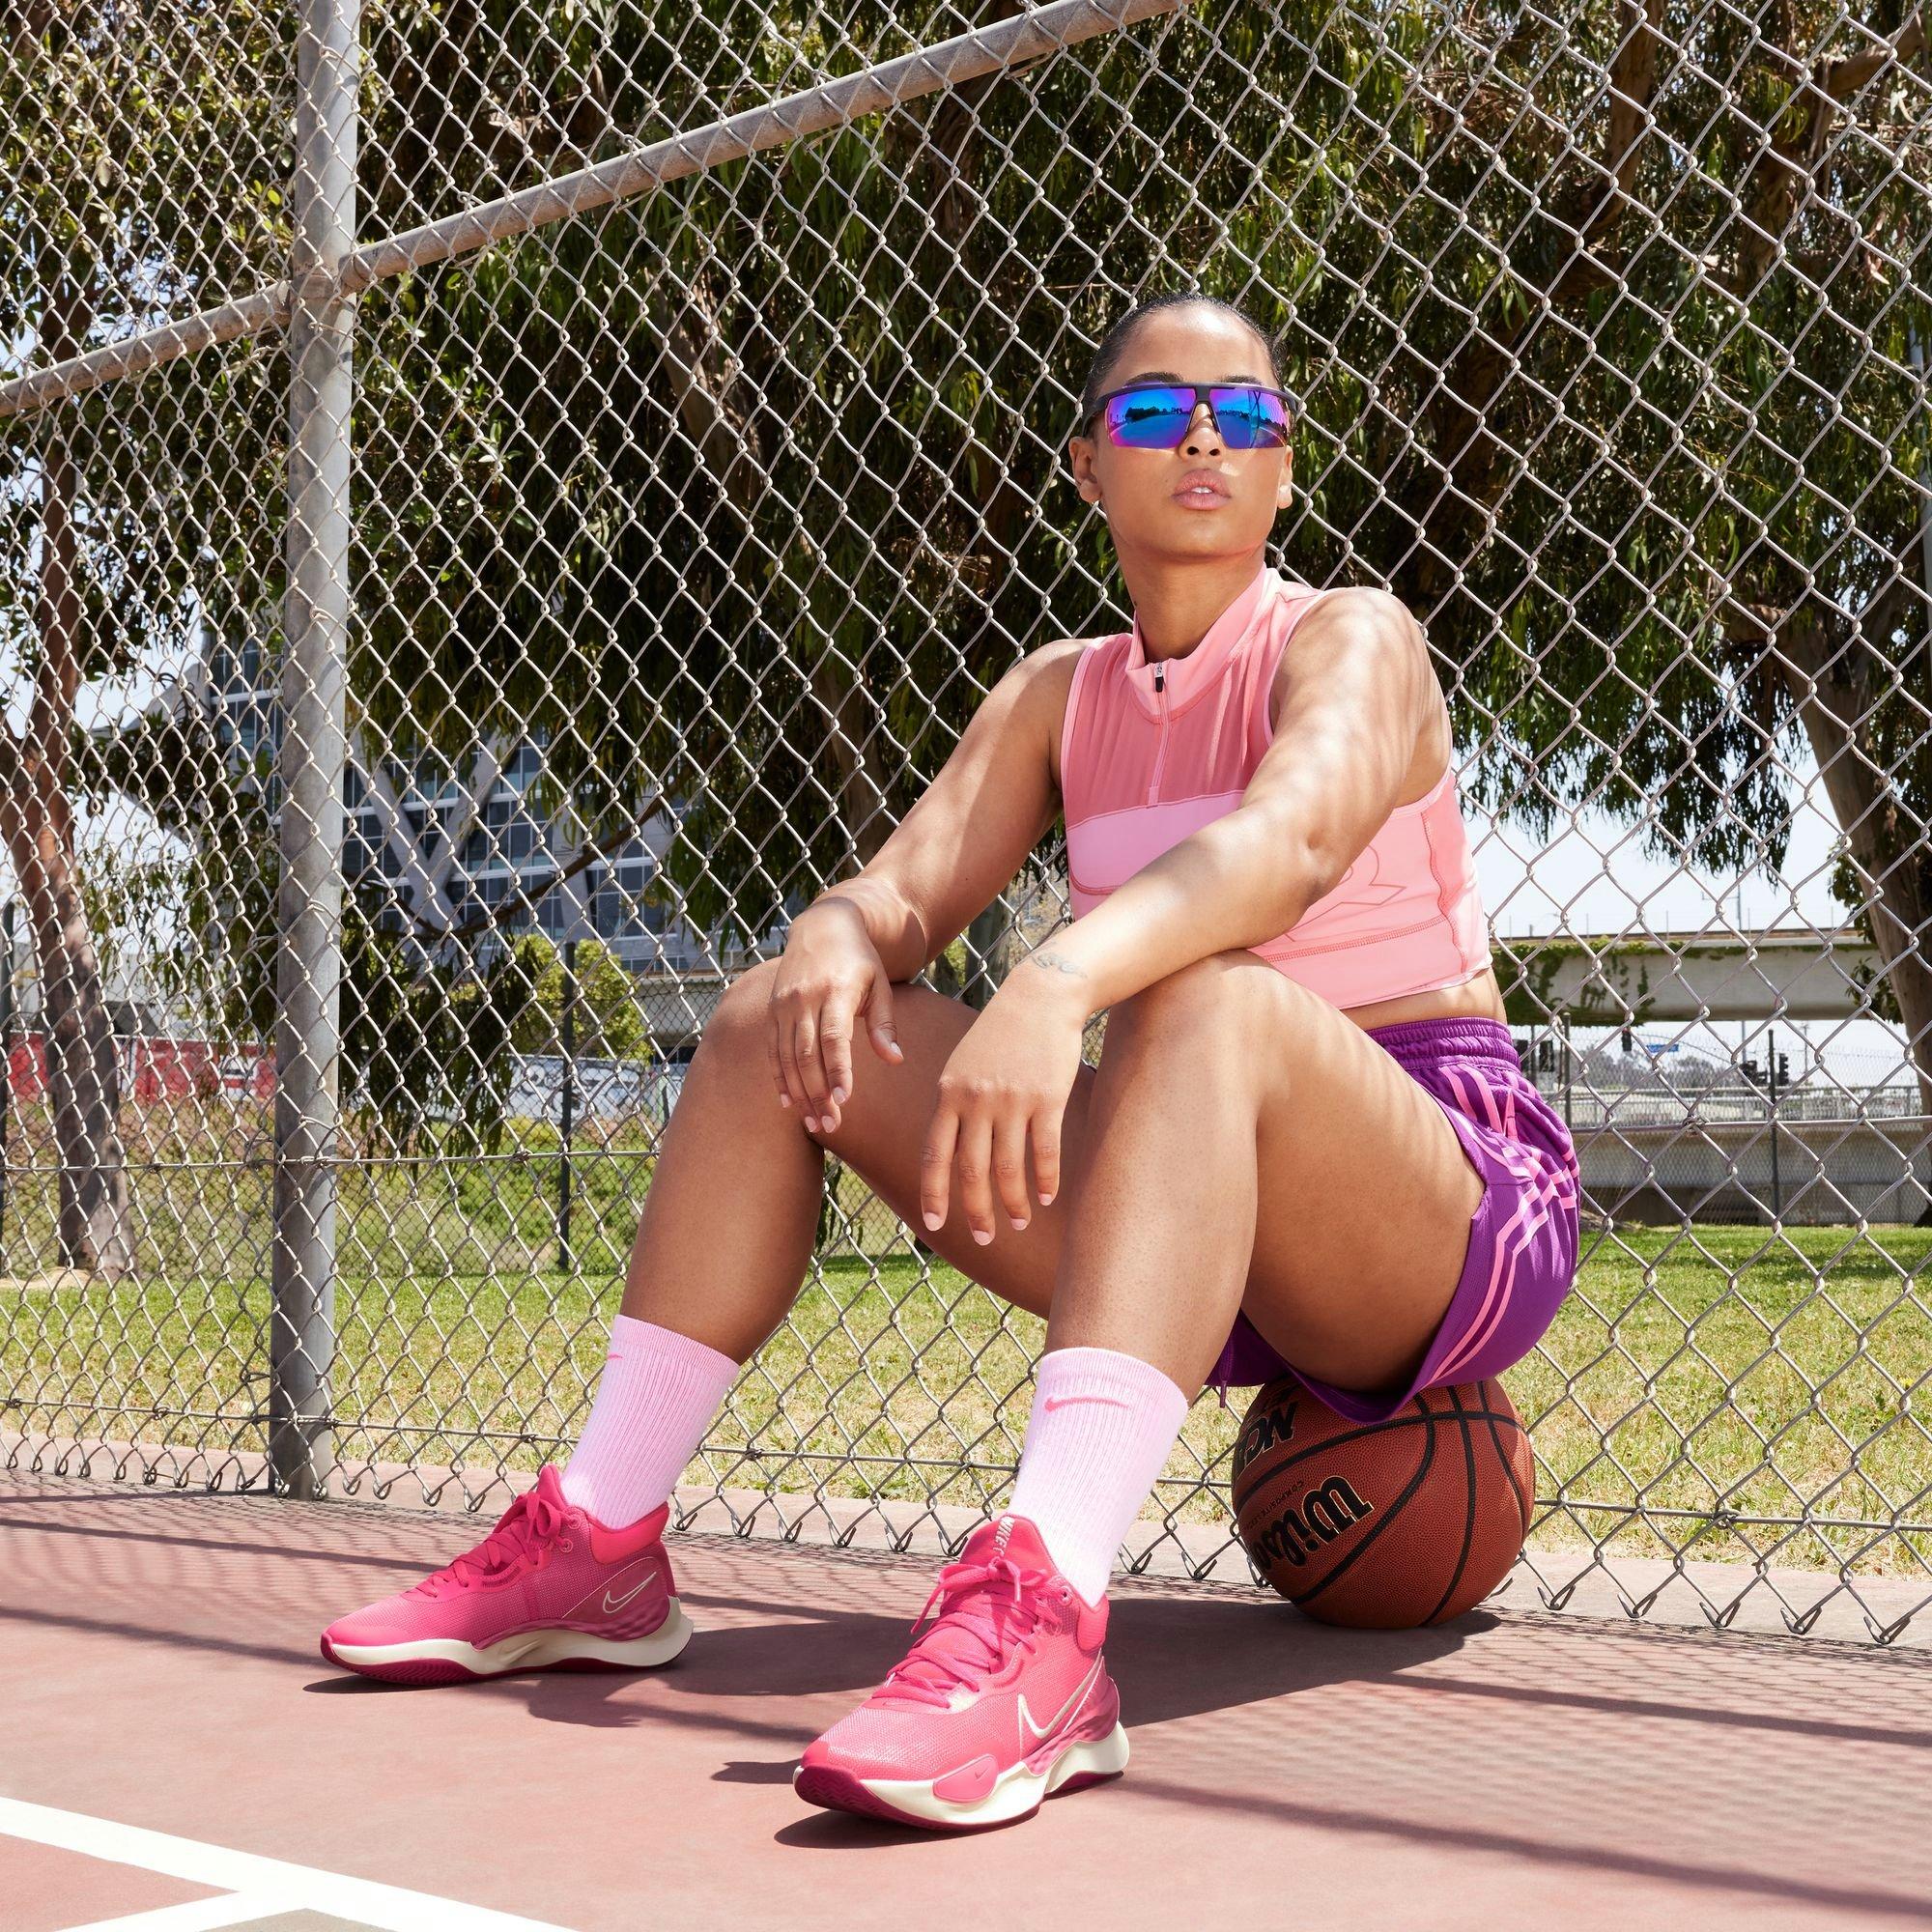 Nike Renew Elevate 3 Women's Basketball Shoes